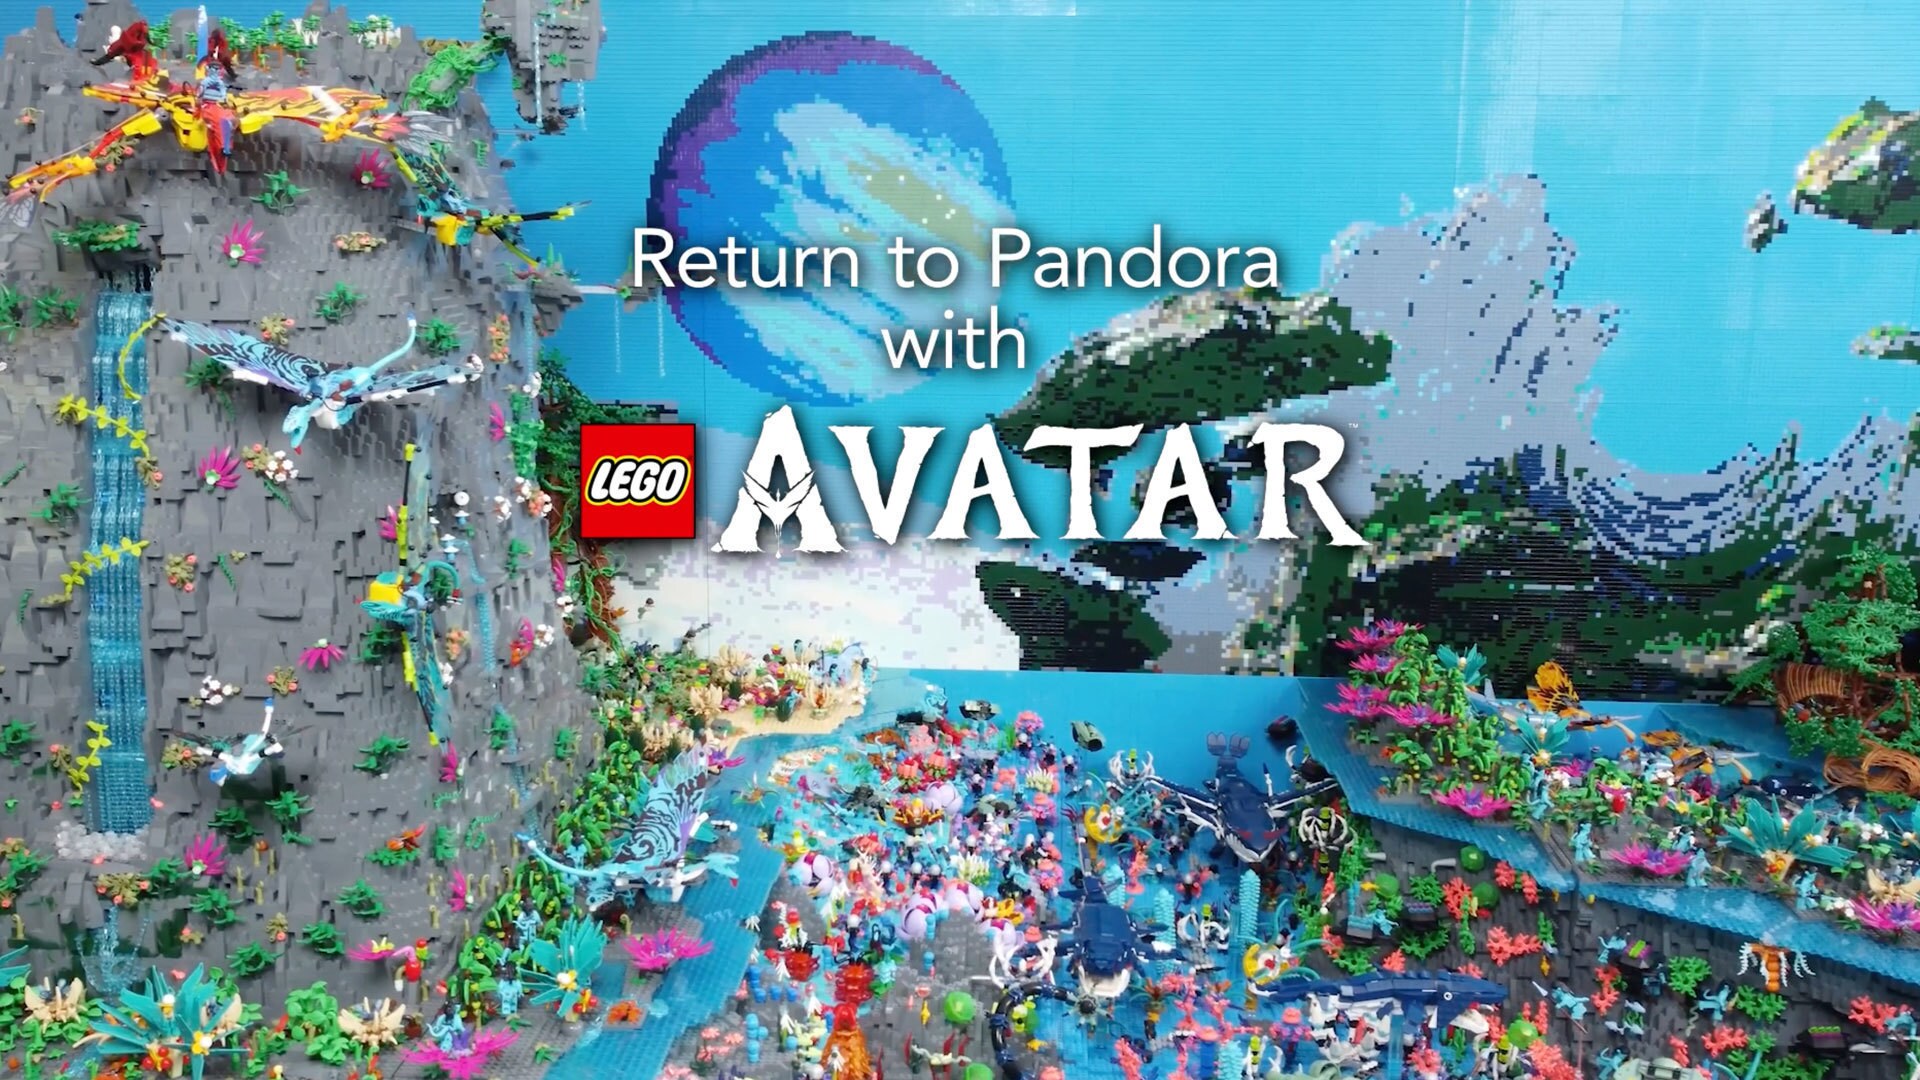 Image of a large LEGO diorama of Pandora.